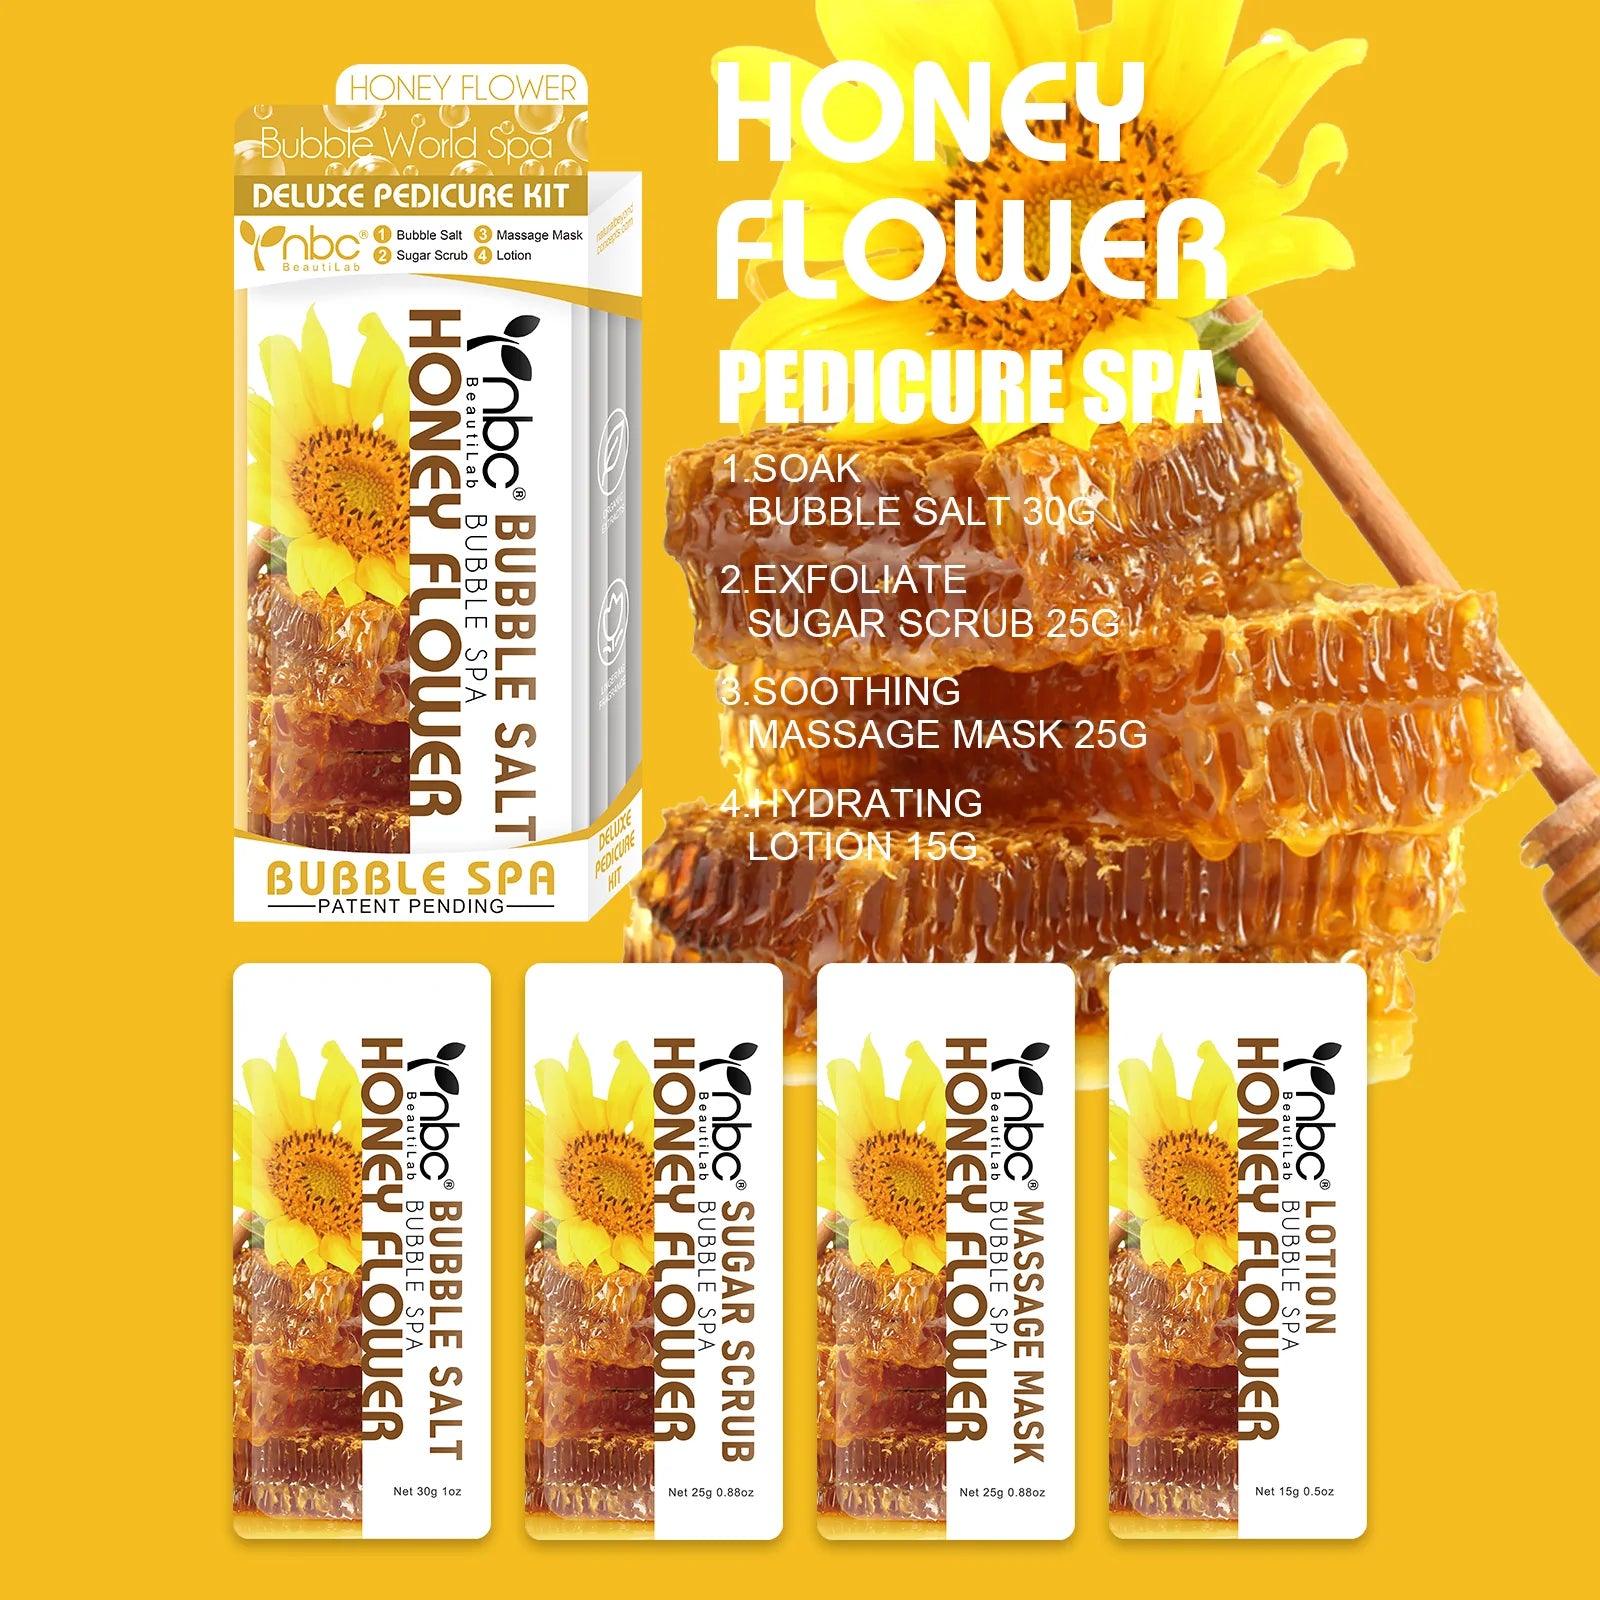 nbc Bubble Spa Pedicure 4 Step Kit - Honey Flower